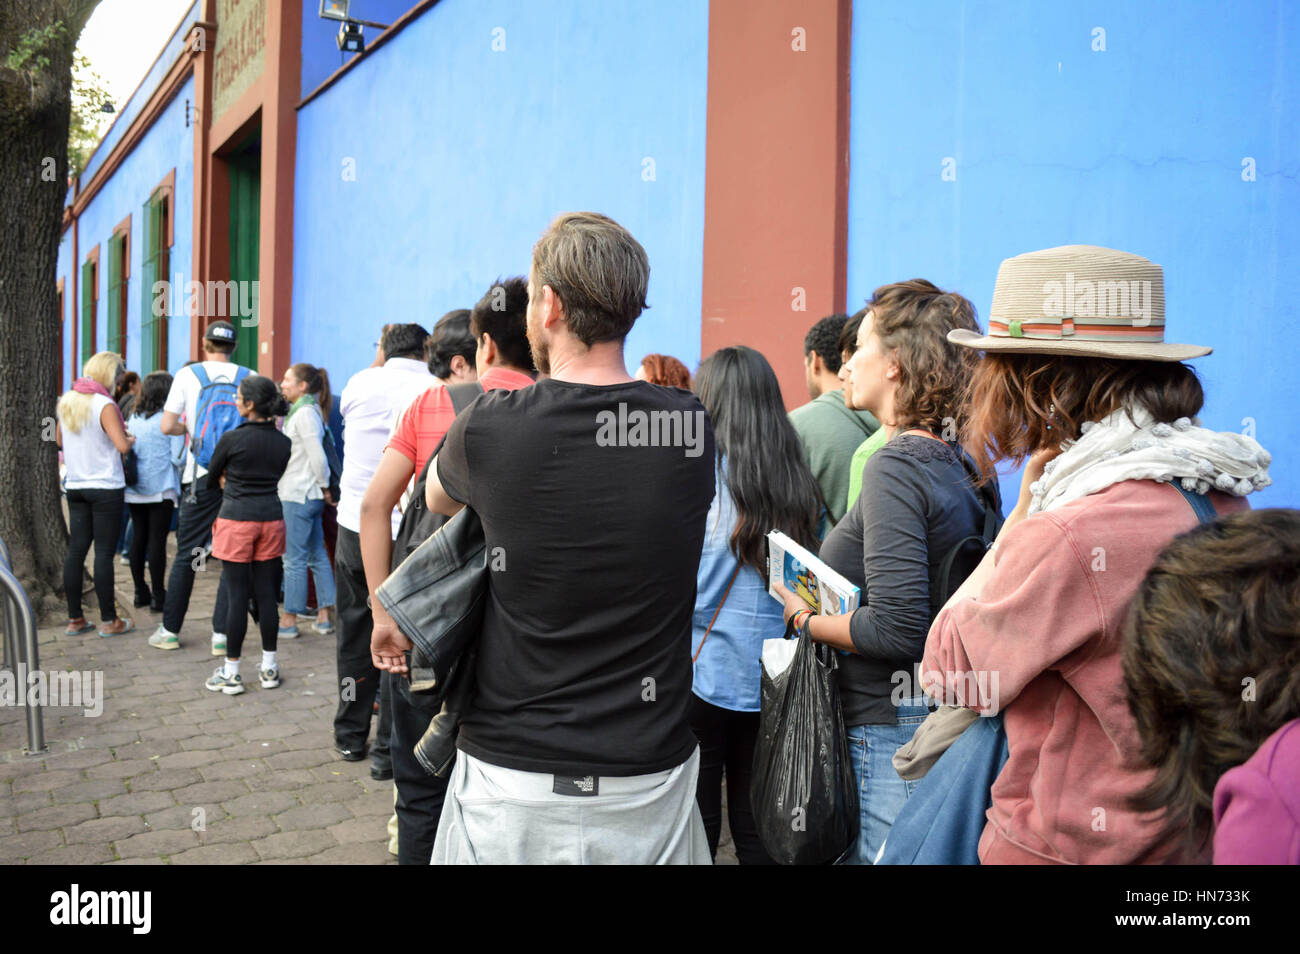 Mexiko-Stadt, Mexiko - 2. November 2014: Touristen in der langen Schlange kommt man zu dem berühmten Frida Kalho Museum in Mexiko-Stadt, flachen DOF warten Stockfoto